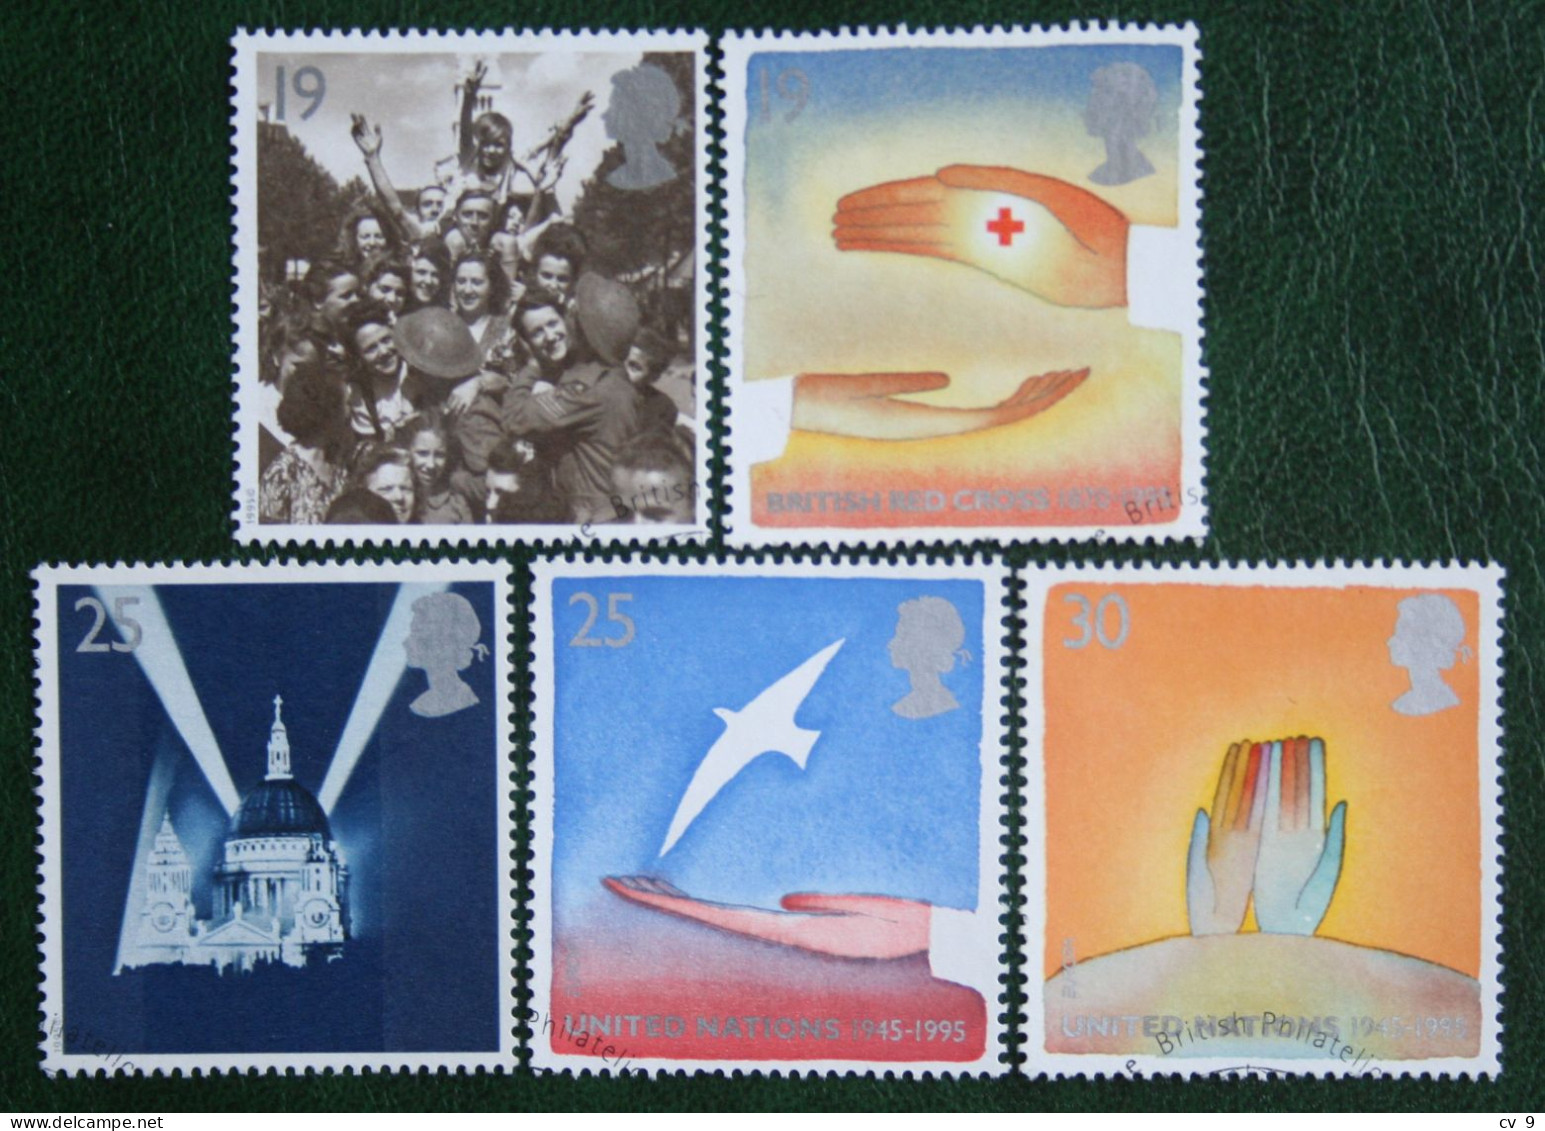 UN United Nations Red Cross (Mi 1571-1575) 1995 Used Gebruikt Oblitere ENGLAND GRANDE-BRETAGNE GB GREAT BRITAIN - Used Stamps